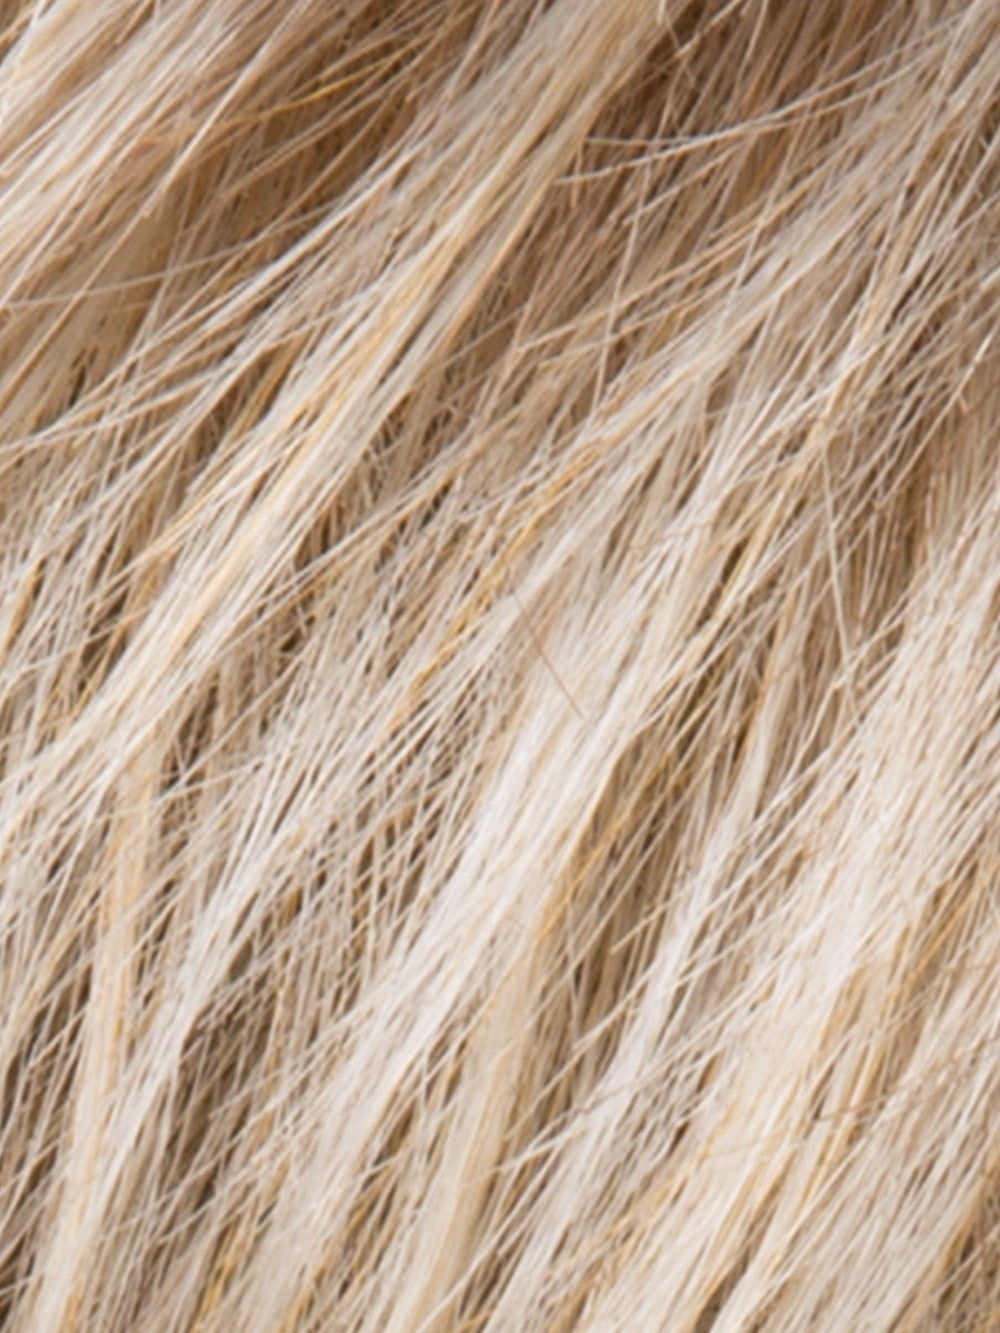 SANDY BLONDE ROOTED | Medium Honey Blonde, Light Ash Blonde, and Lightest Reddish Brown Blend with Dark Roots